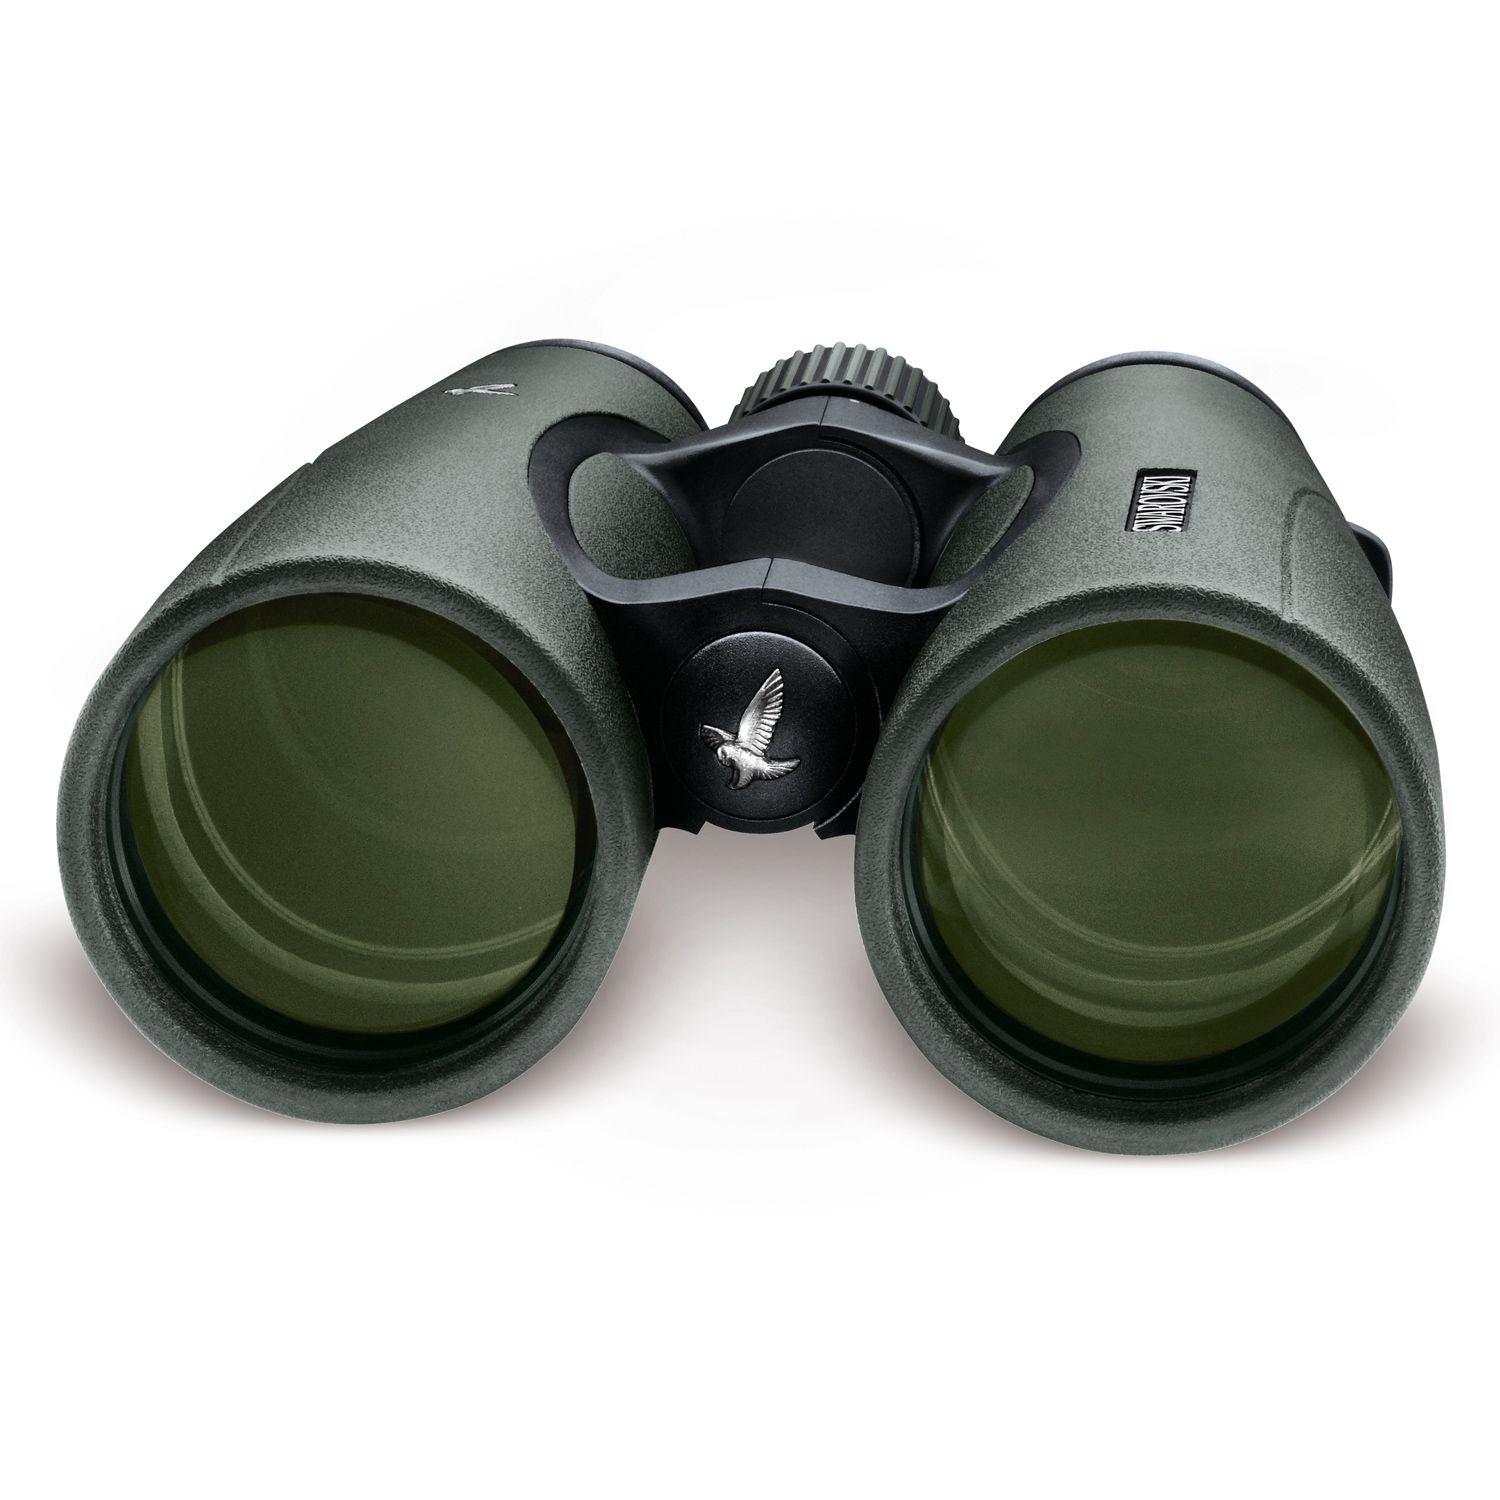 Swarovski 10x50 EL50 FieldPro Binoculars (Green) - Product Photo 6 - Close up of the optics